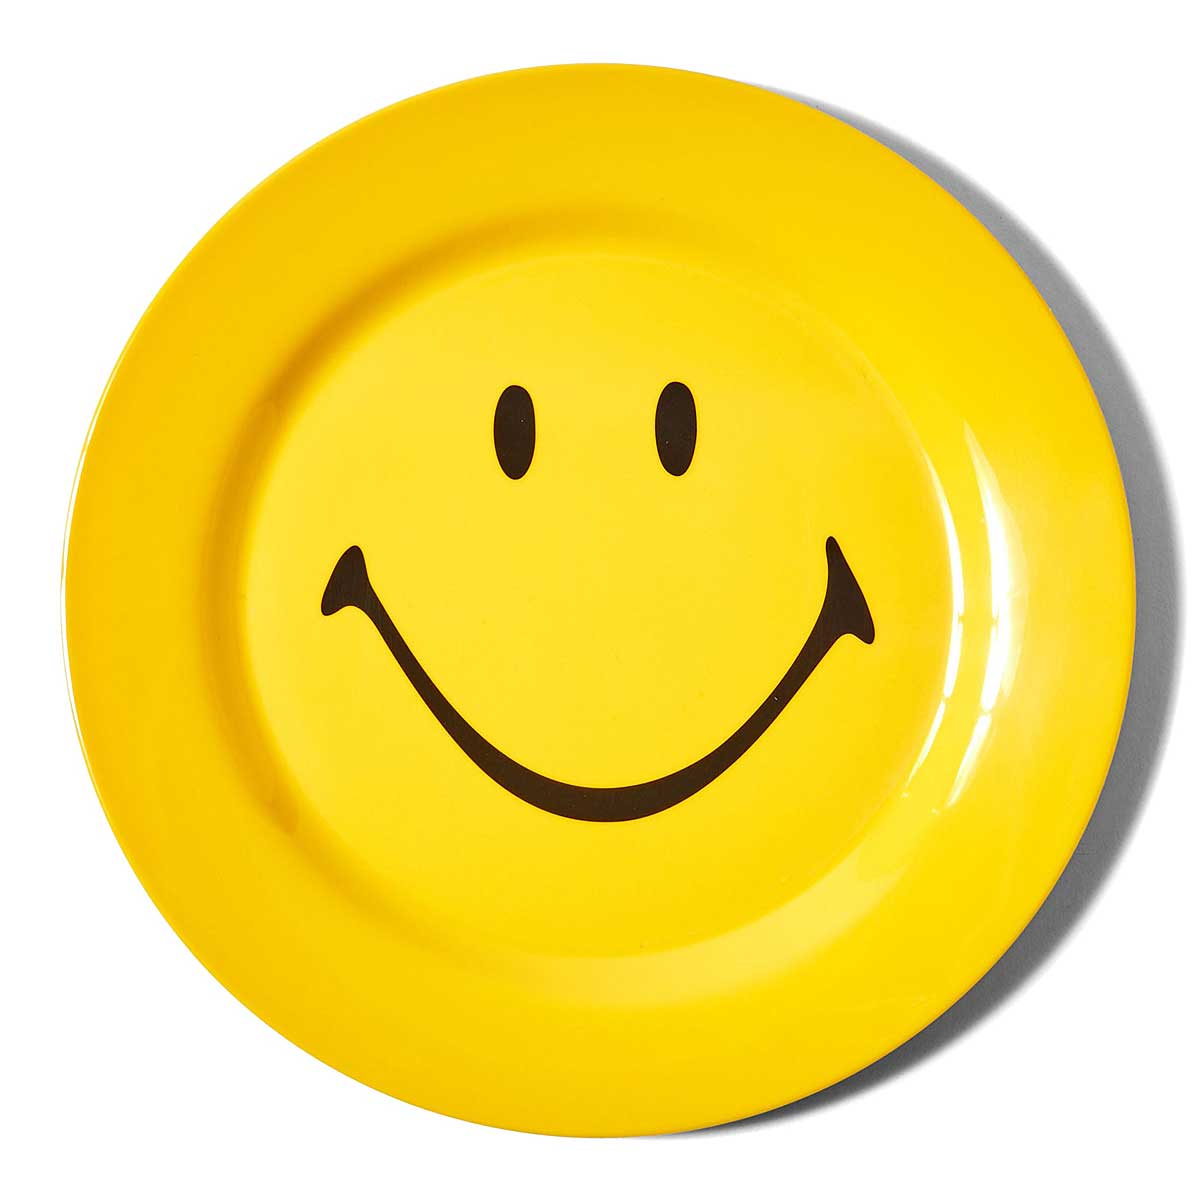 Market Smiley Plate 4 Piece Set, Yellow